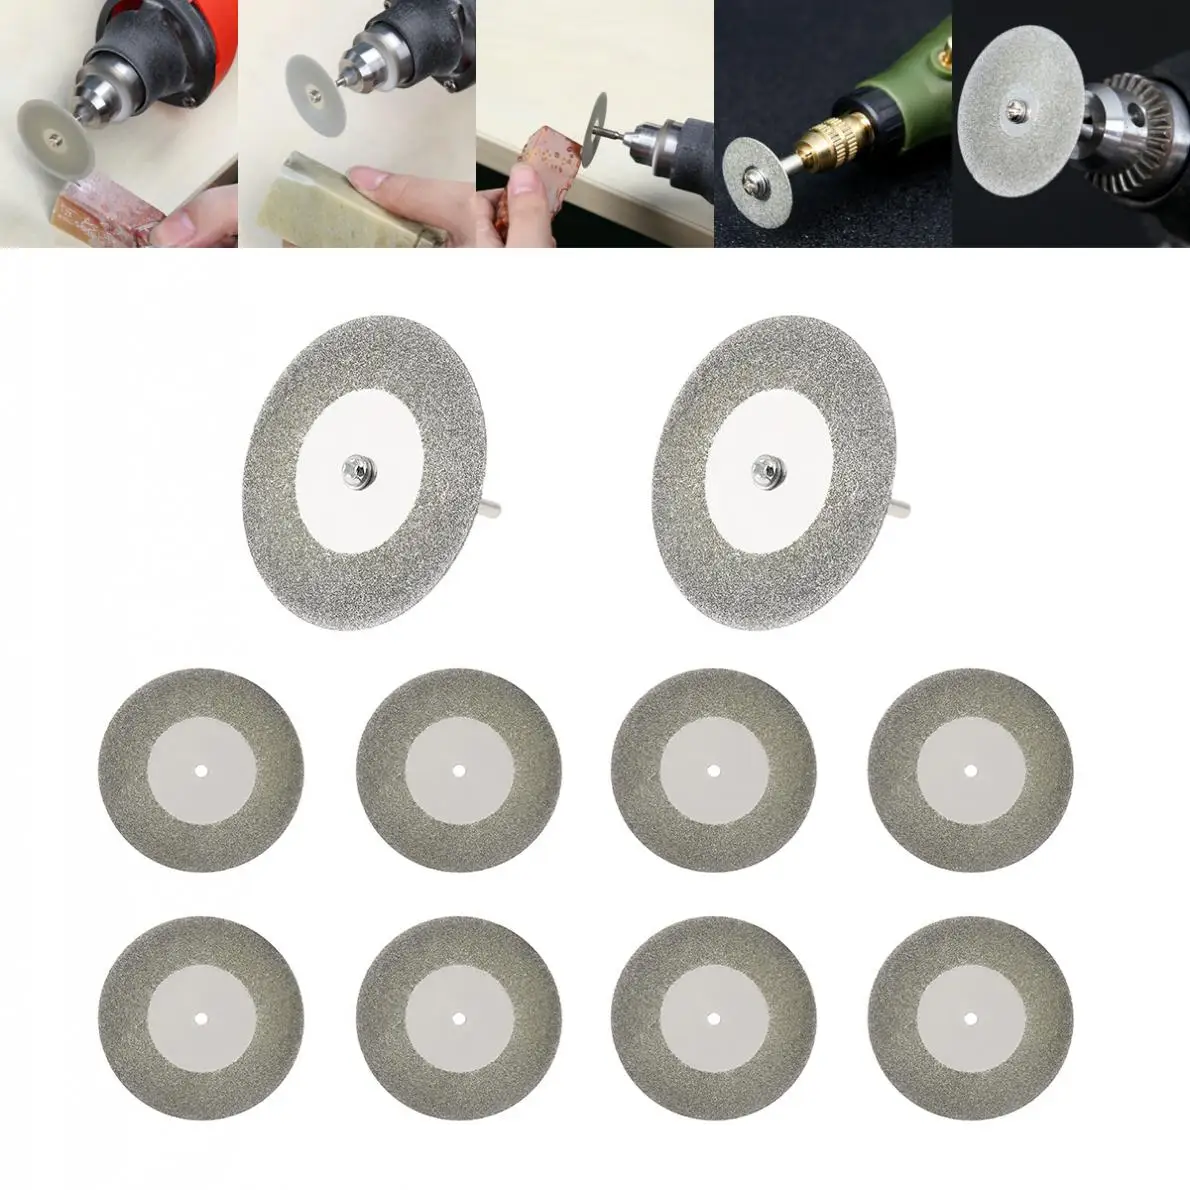 10pcs / lot 50mm Diamond Cutting Discs Saw Blade with  2pcs 3mm Diameter Fixed Rod for Cutting Glass  Metal